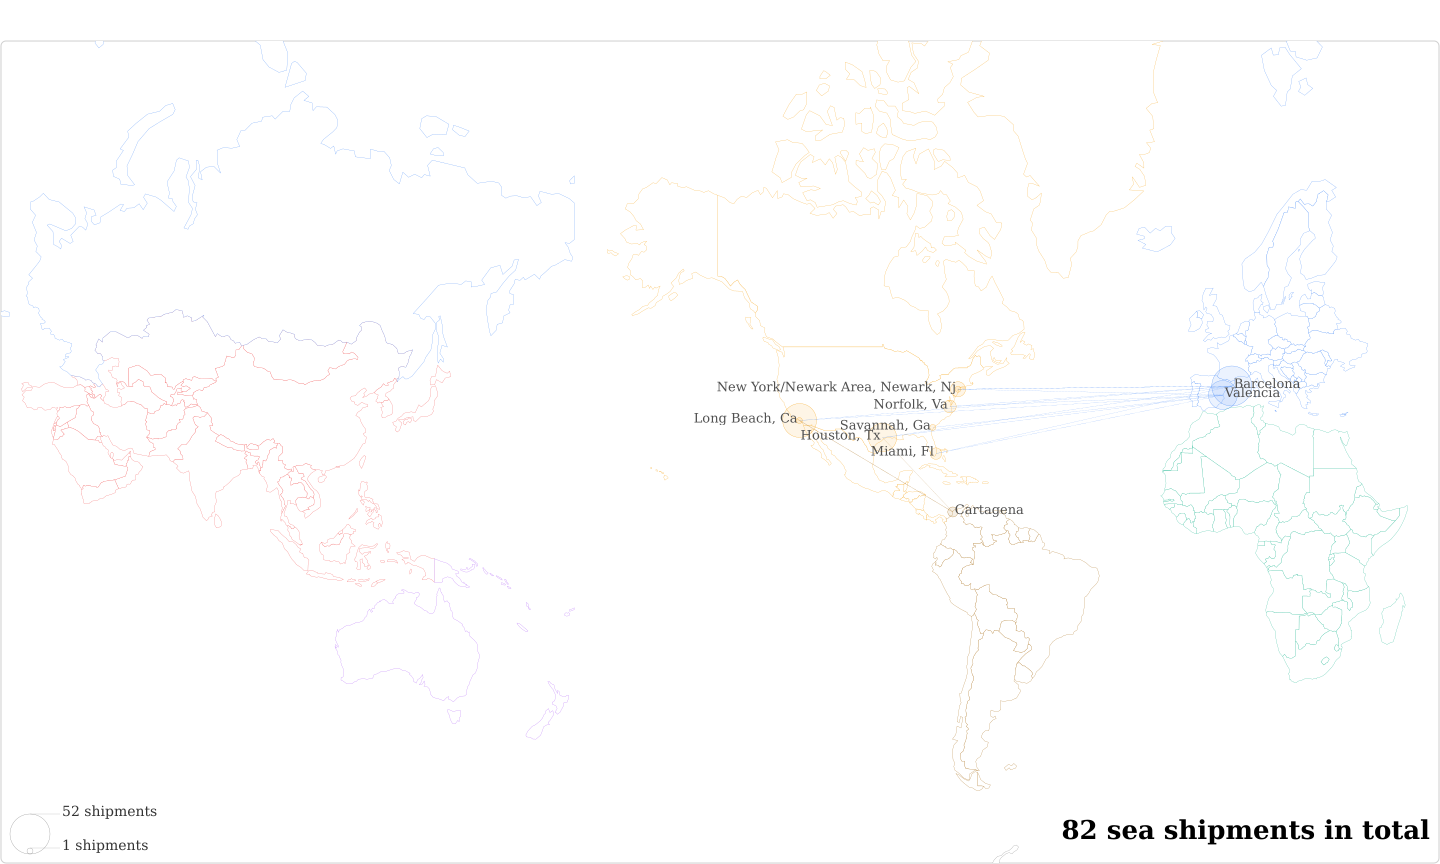 Sevasa Technologics's Imports Per Country Map